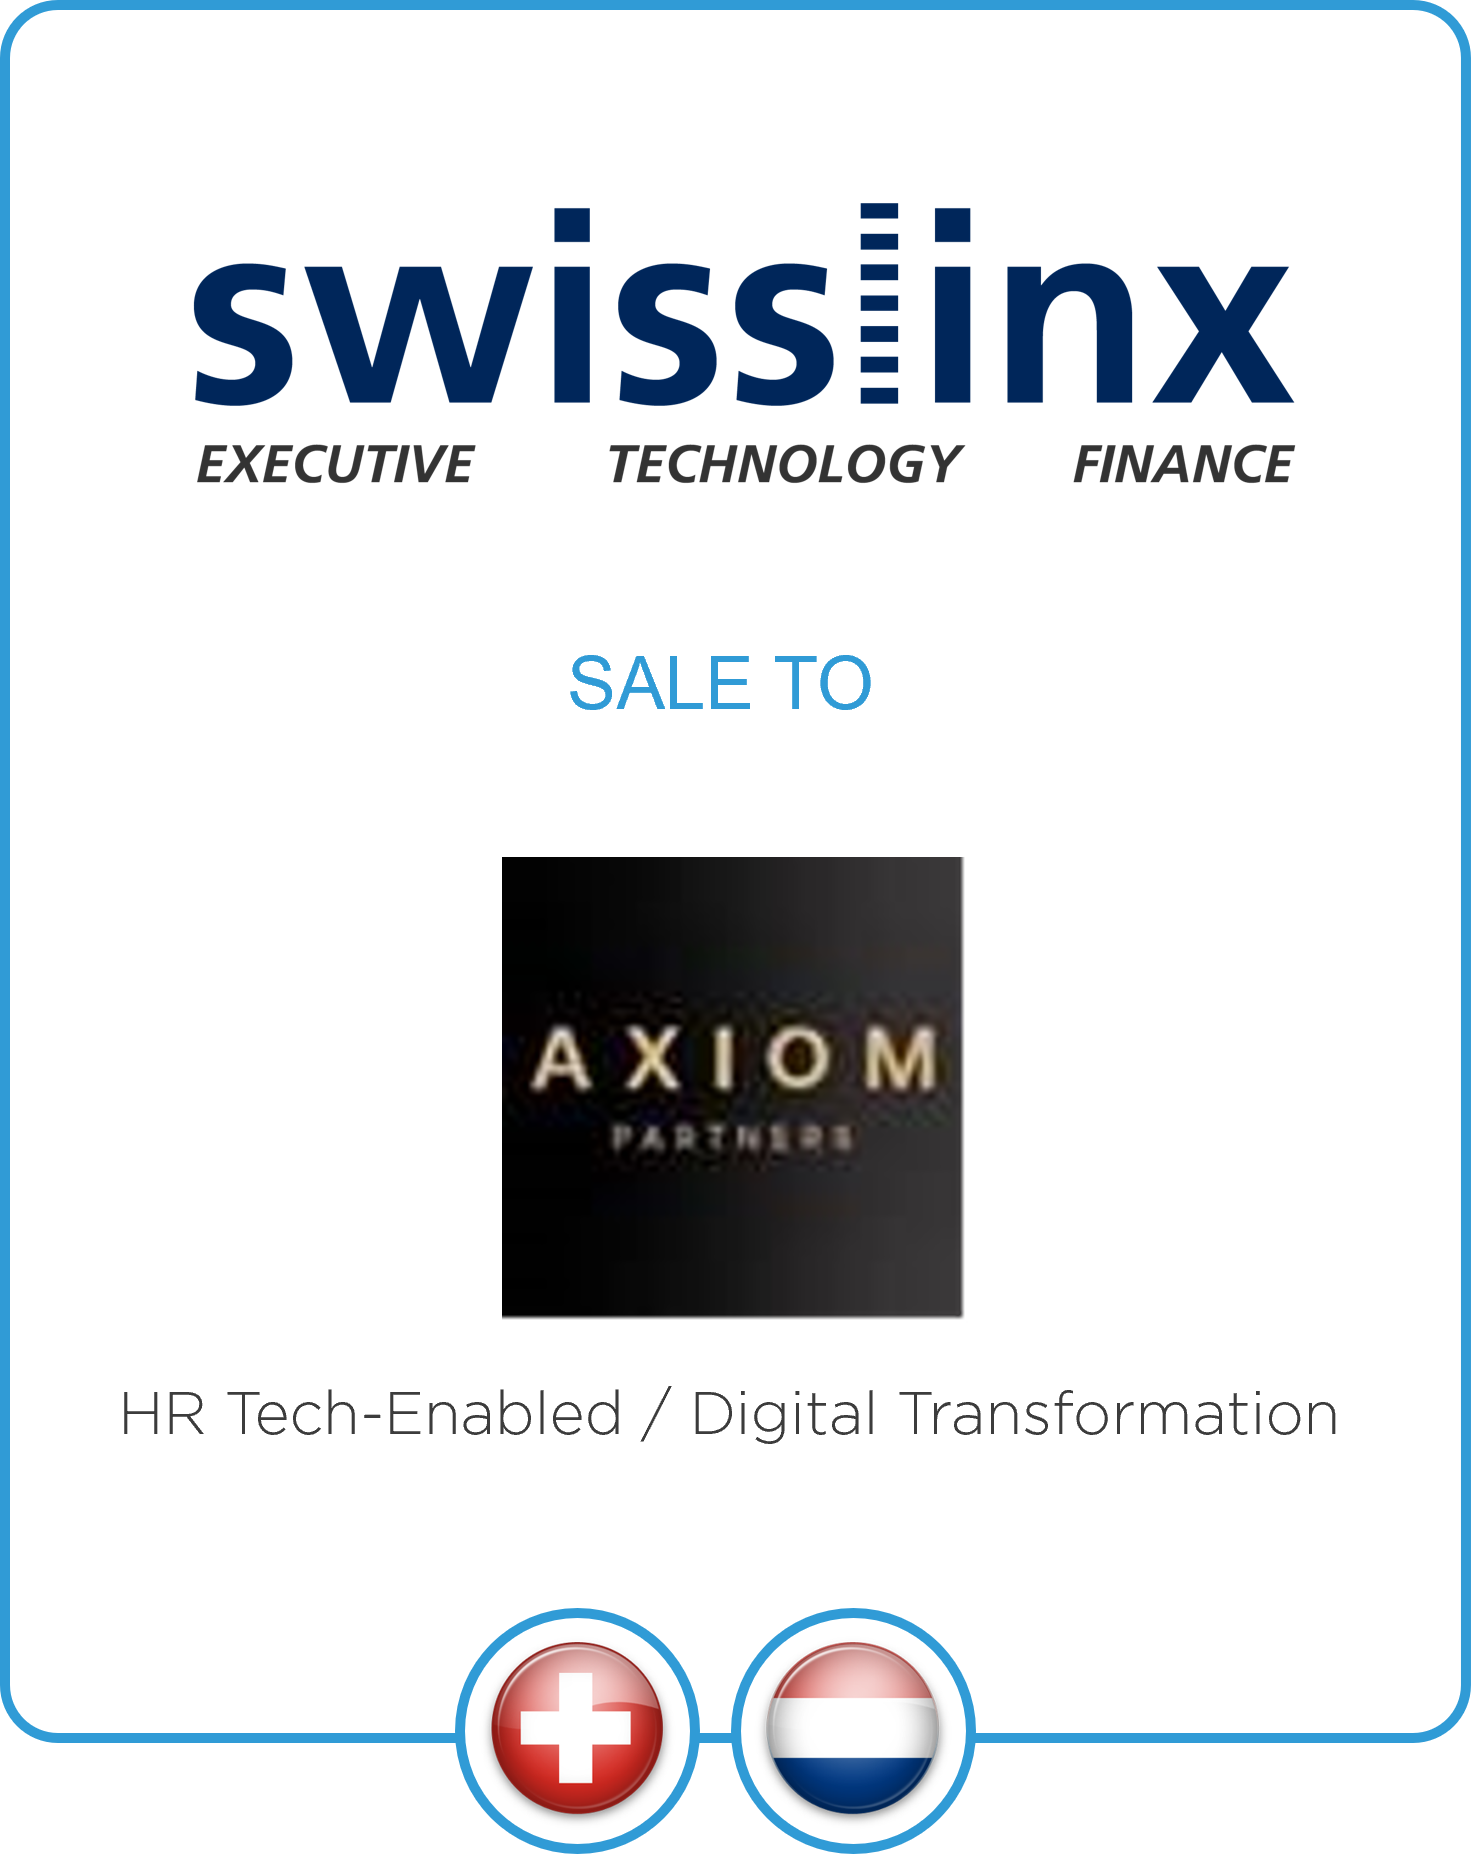 Drake Star Advises Swisslinx on its sale to Axiom Capital Partners